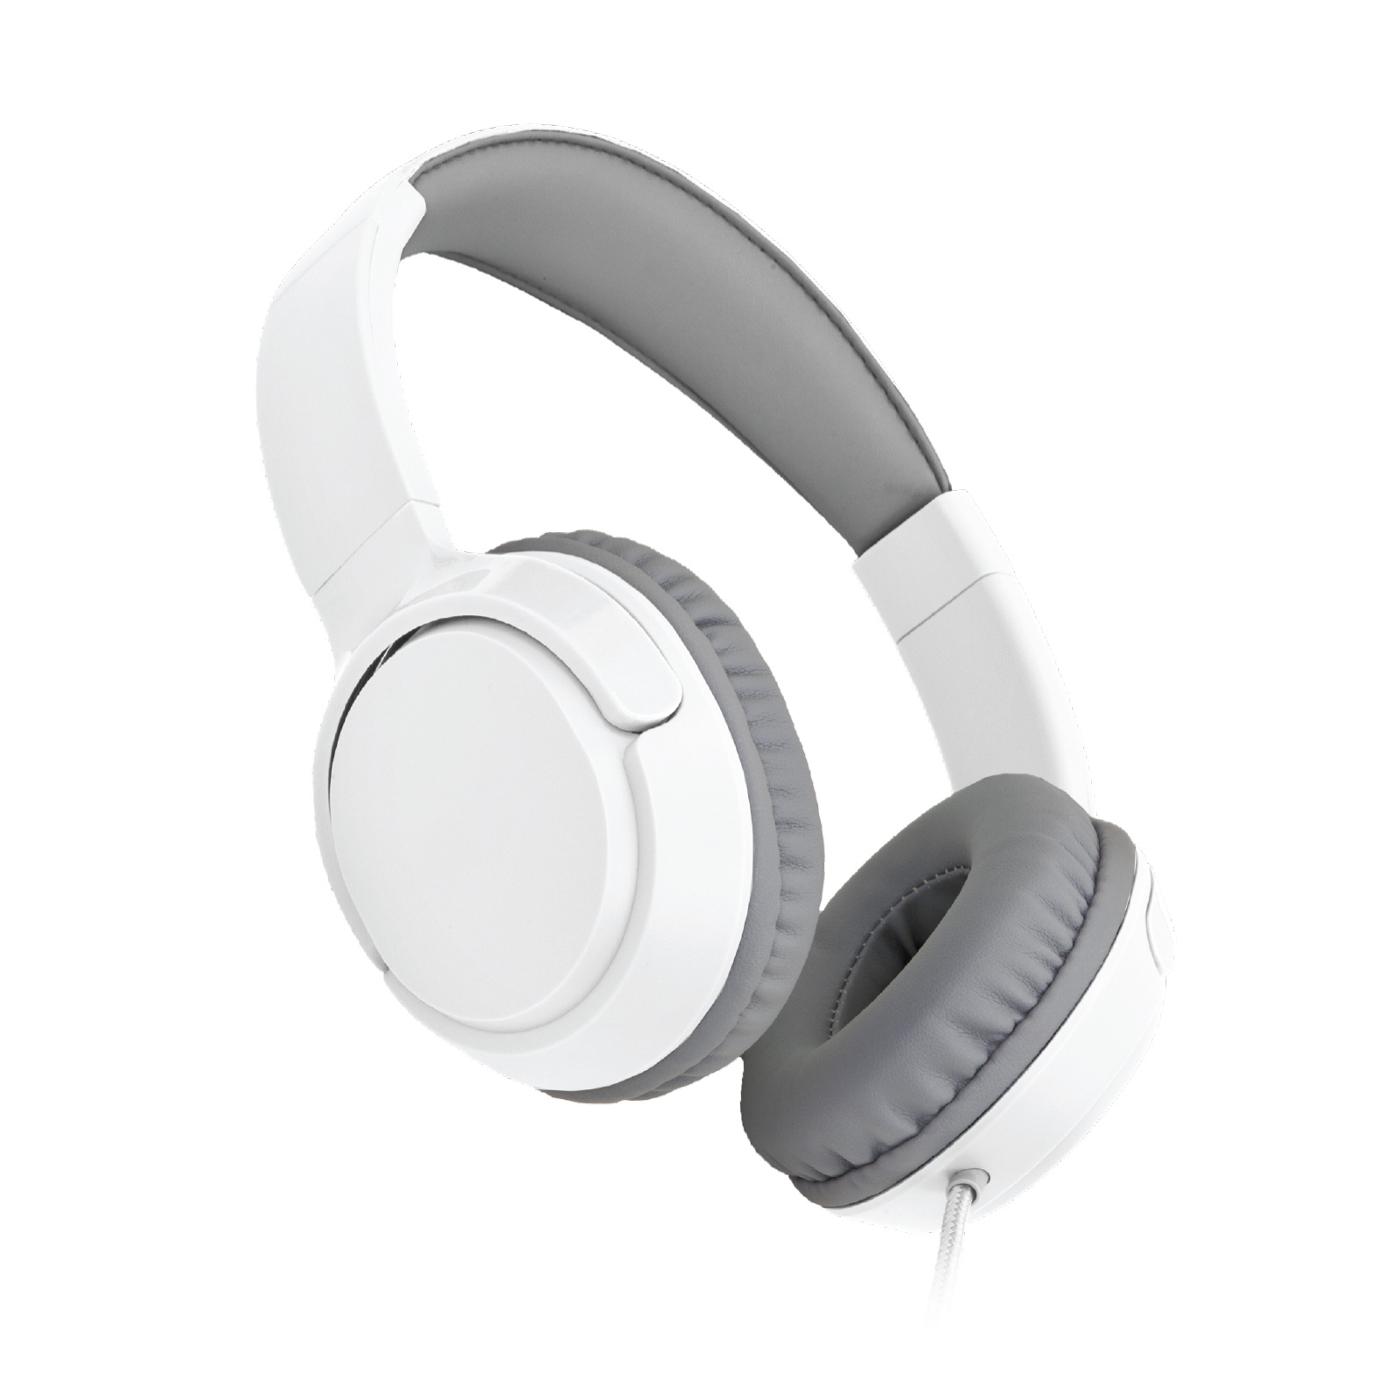 Helix ProJammers Kids Headphones - White & Gray; image 2 of 2